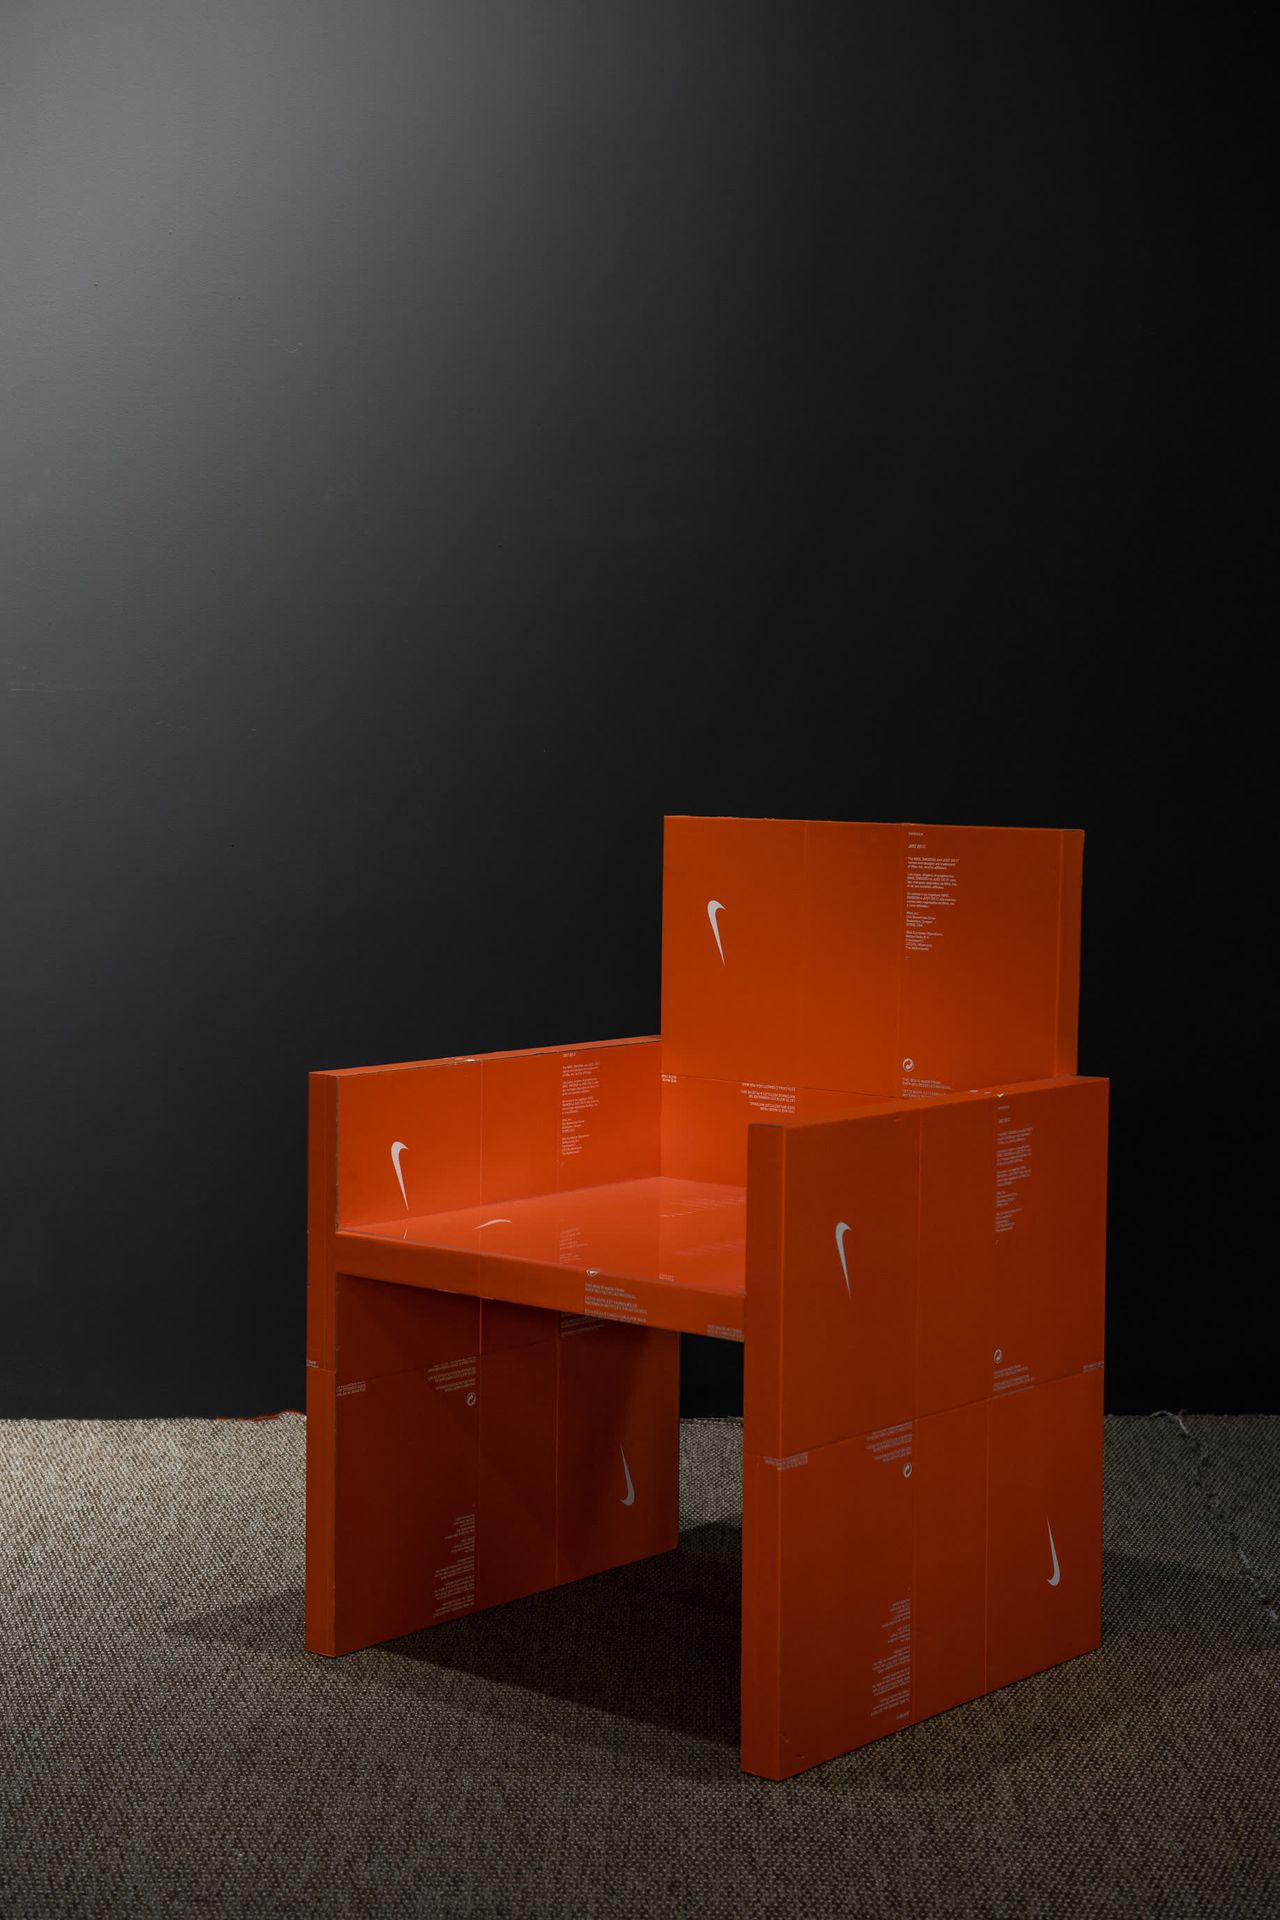 GYUHAN LEE Nikebox家具---扶手椅
鞋盒
2019
H 79 W 52 D 52 cm
来源：Iham Gallery